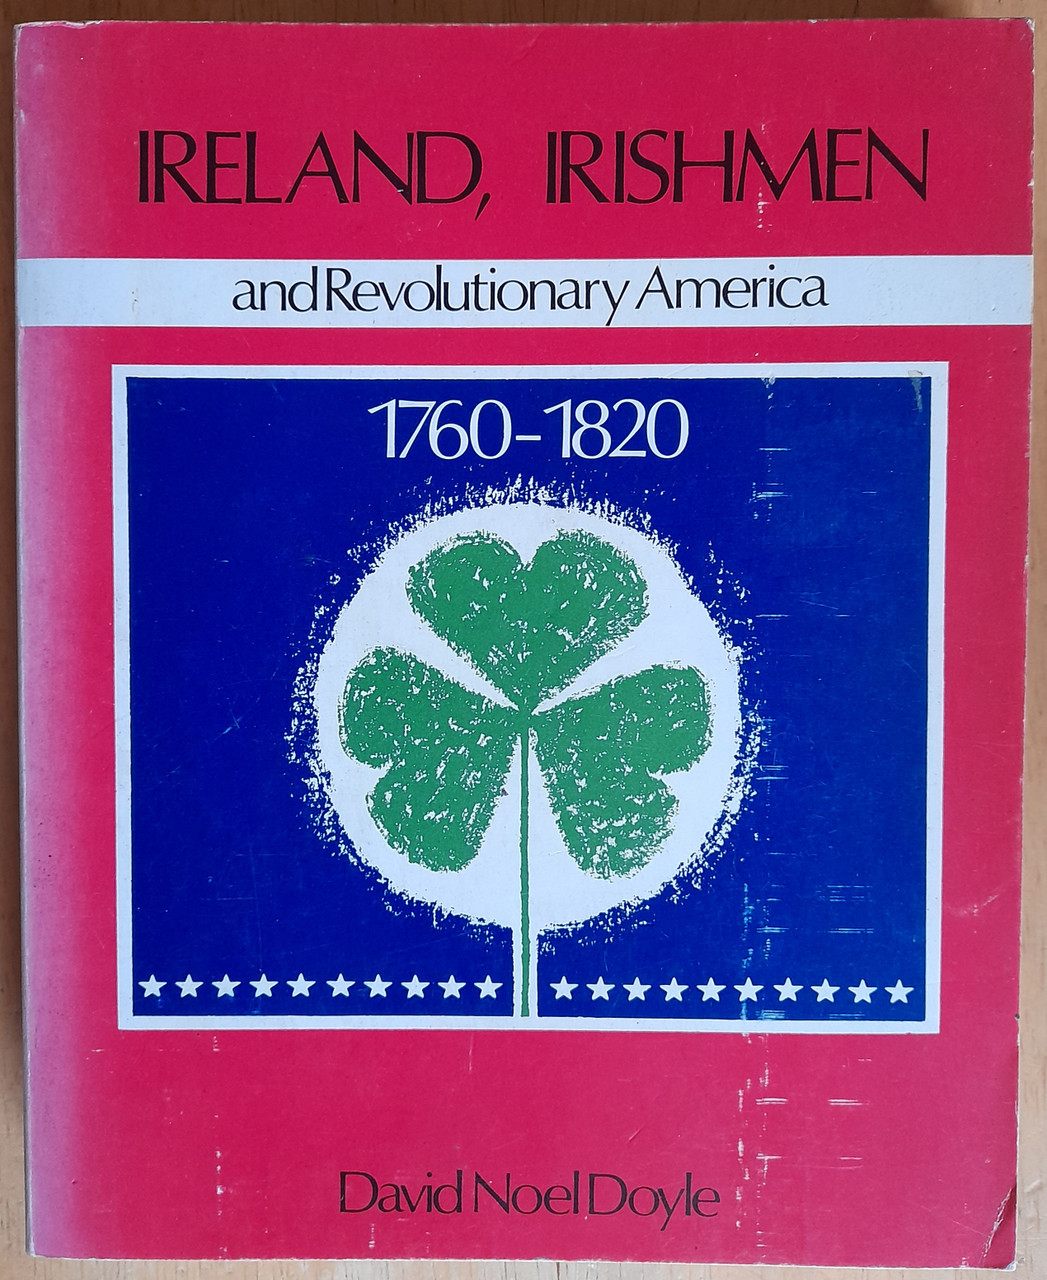 Doyle, David Noel  - Ireland, Irishmen and Revolutionary America 1760-1820 - PB - 1980